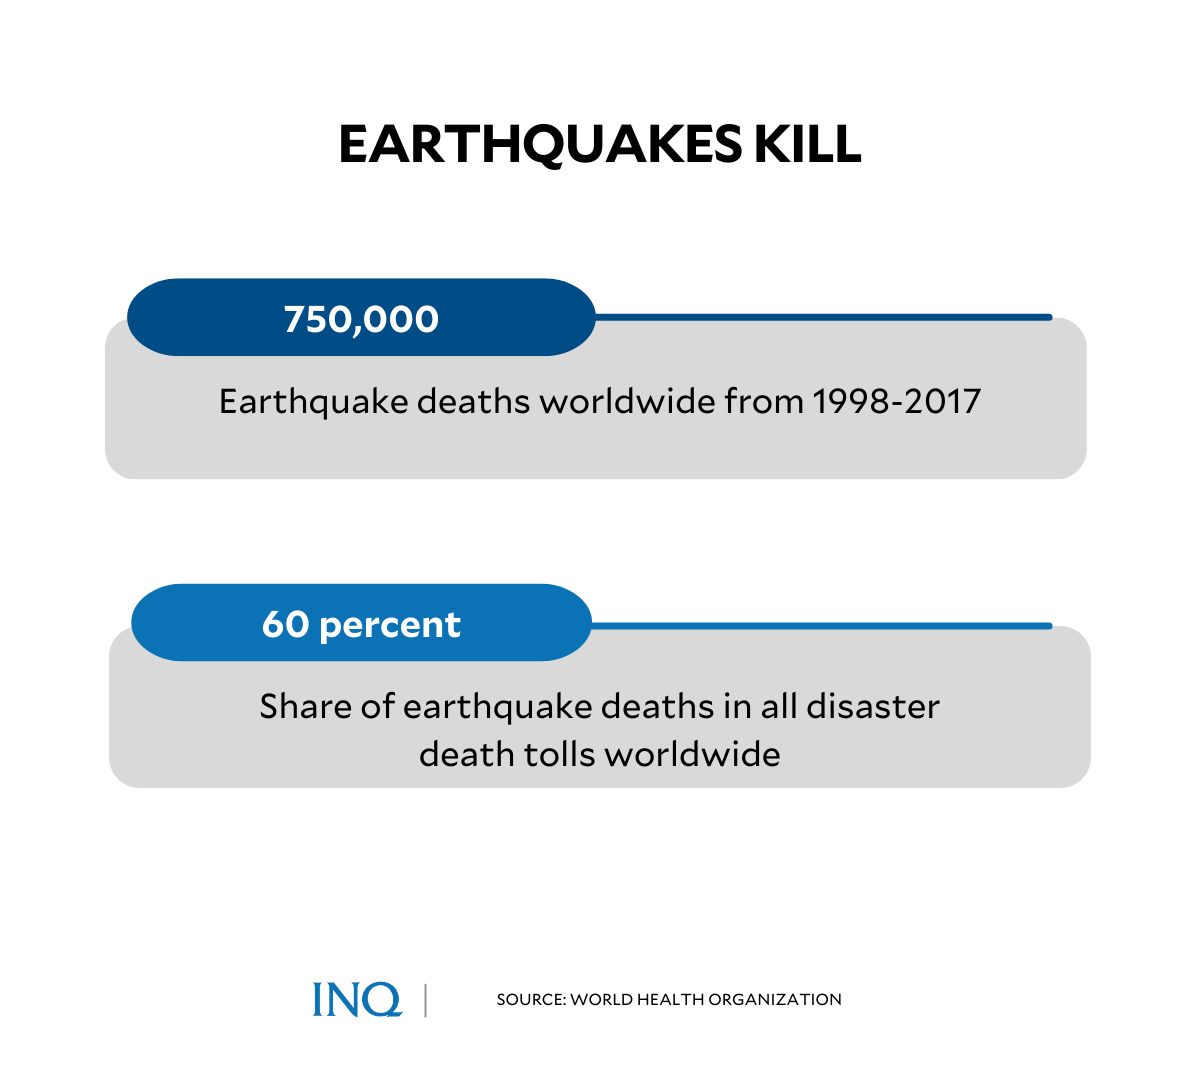 Earthquakes kill